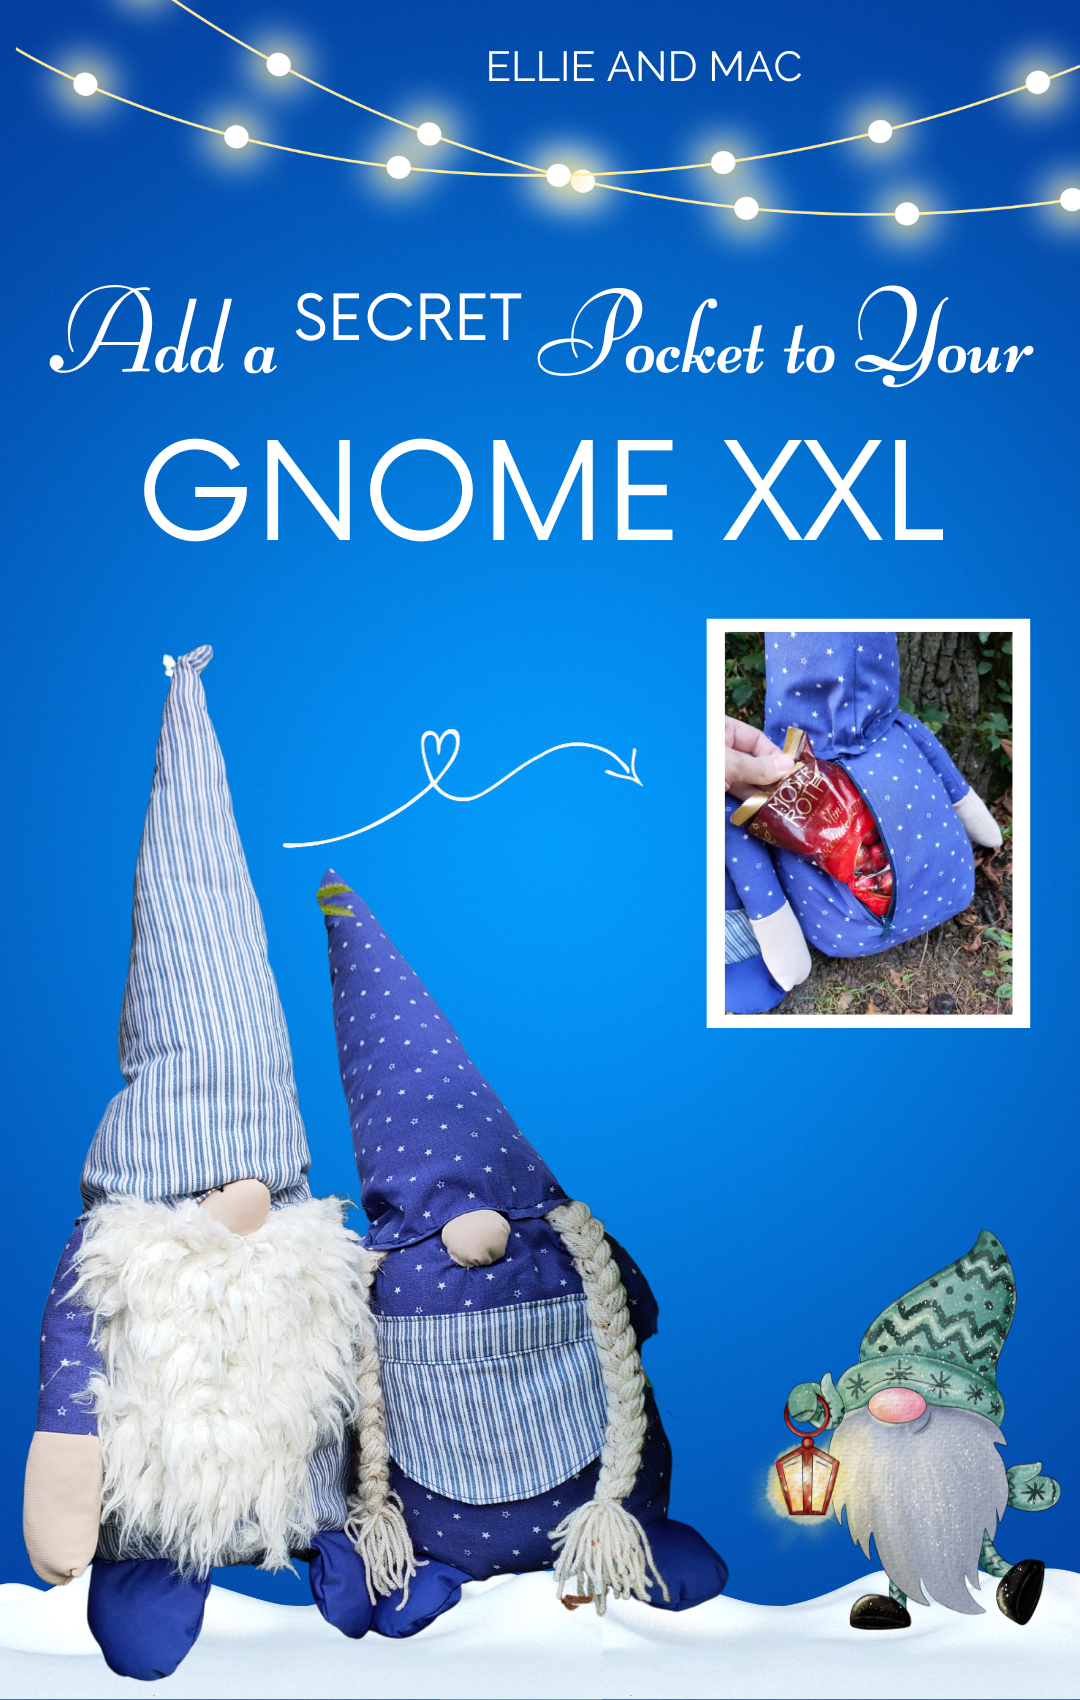 Add a Secret Pocket to Your Gnome XXL